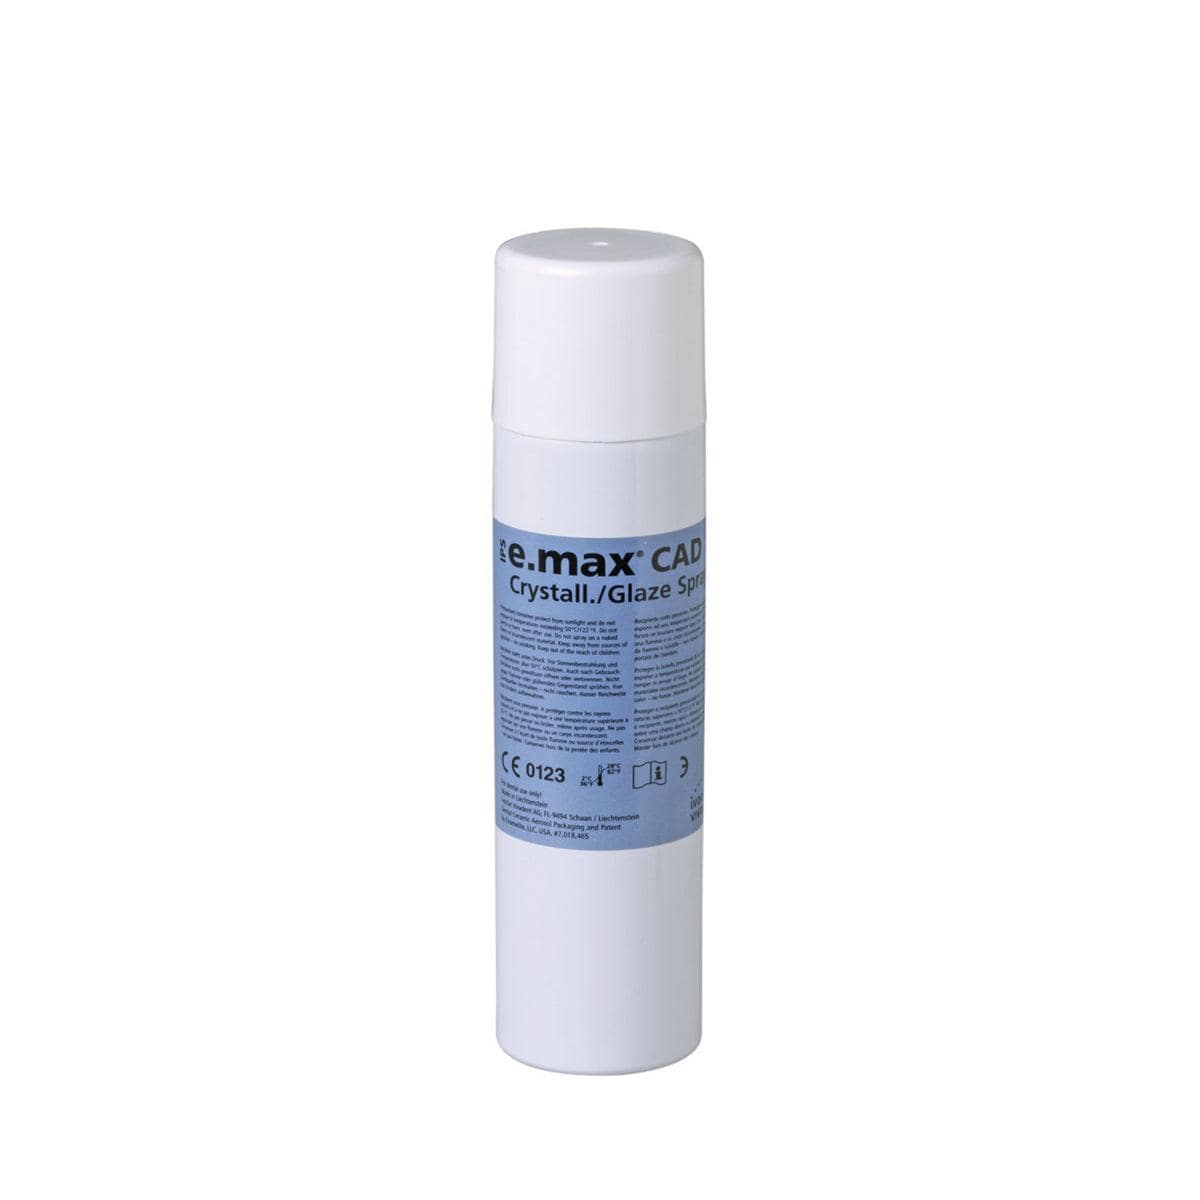 IPS e.max CAD Crystall glazuurspray - Glaze spray, 120 ml